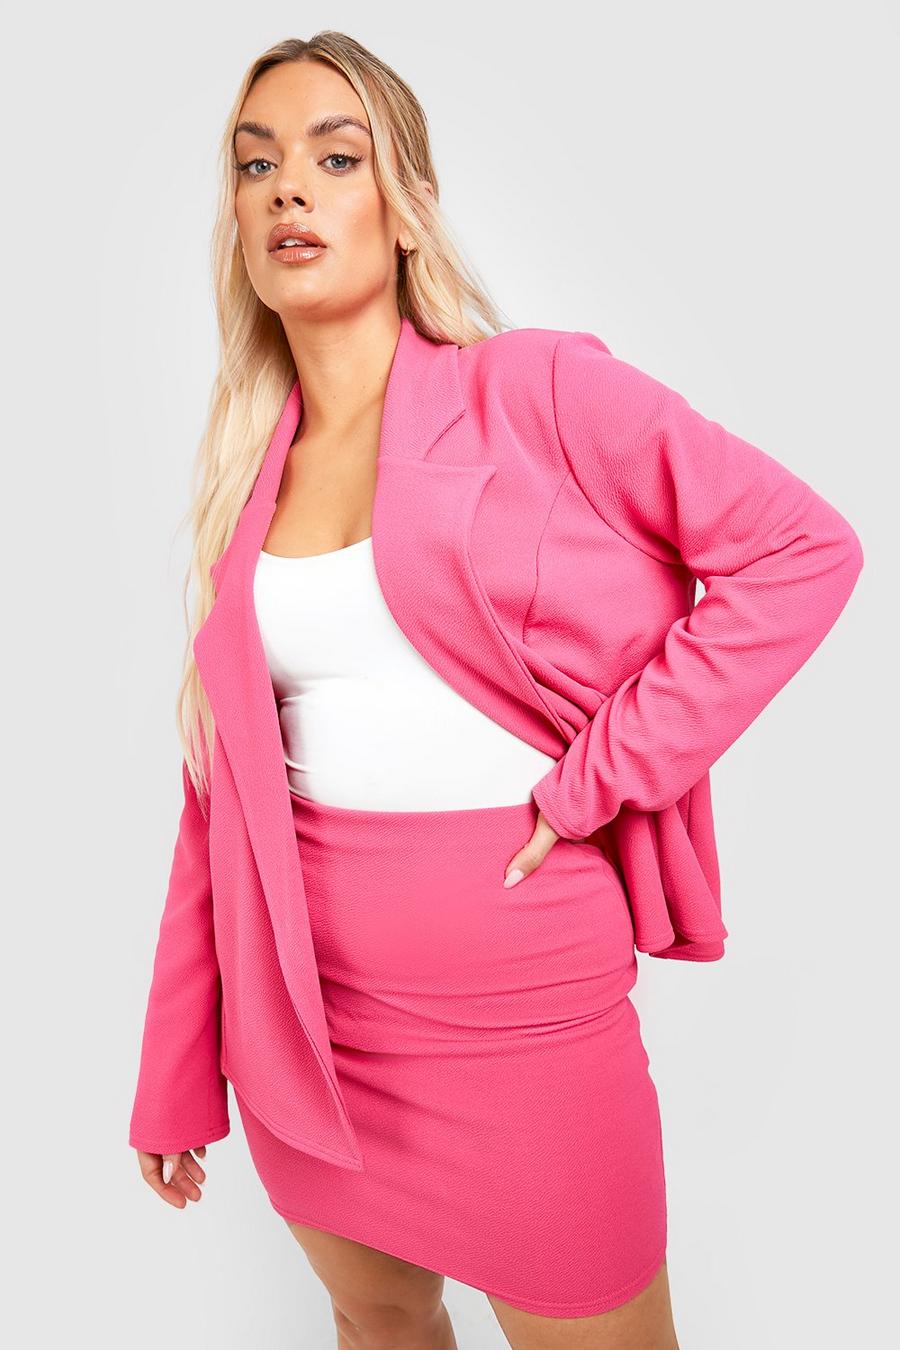 Grande taille - Blazer ample en jersey, Hot pink